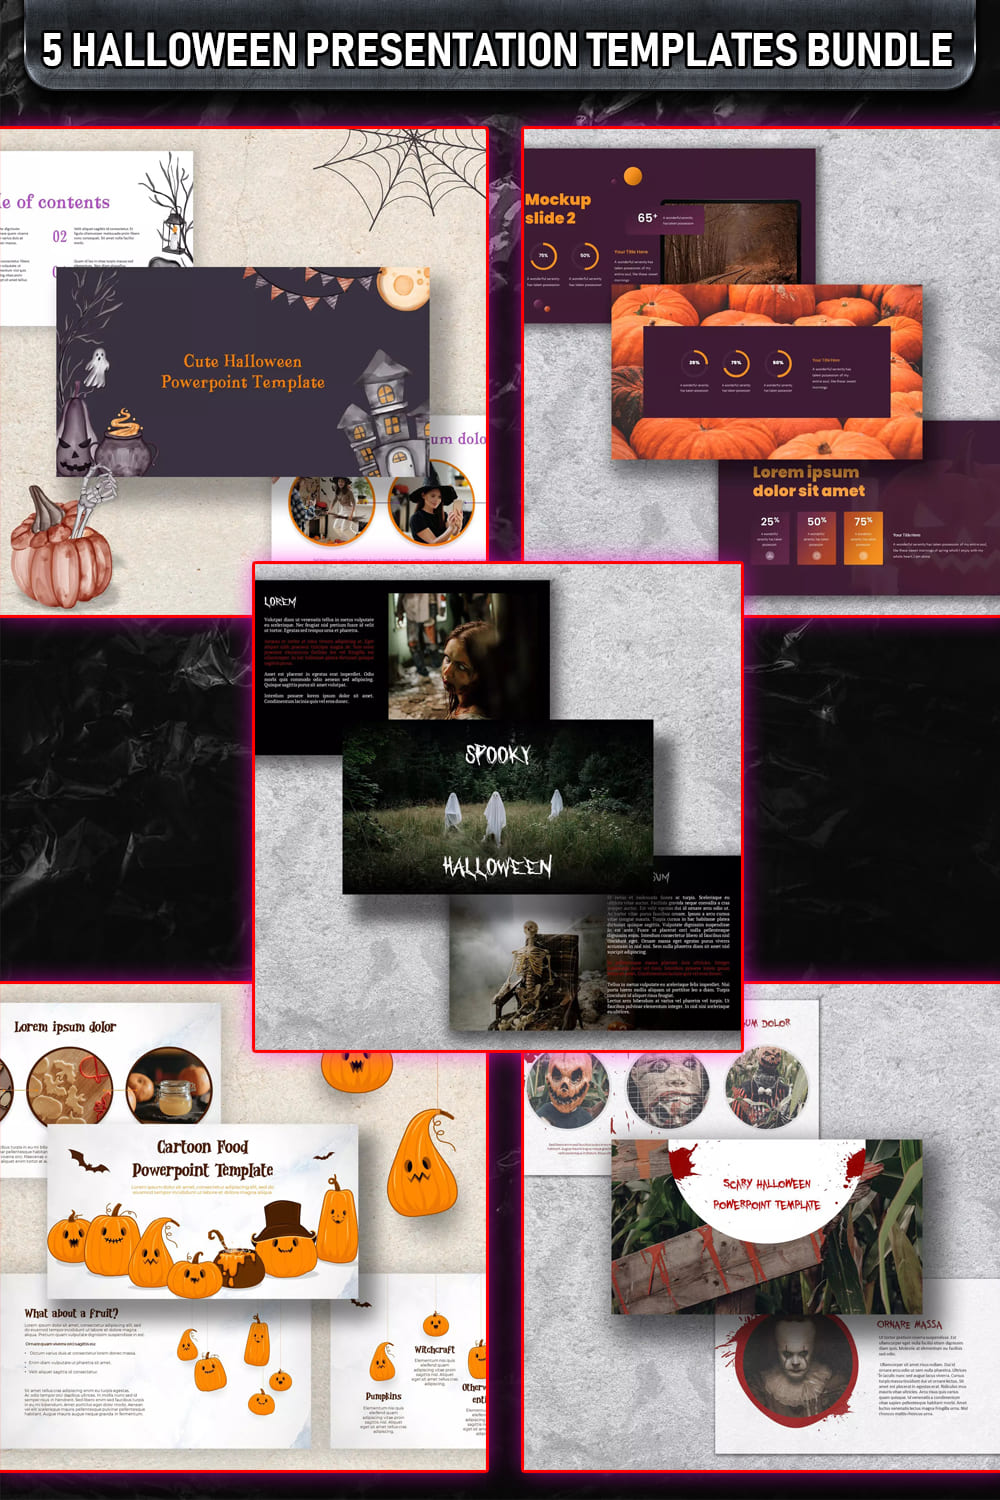 Halloween Presentation Templates Bundle Pinterest.